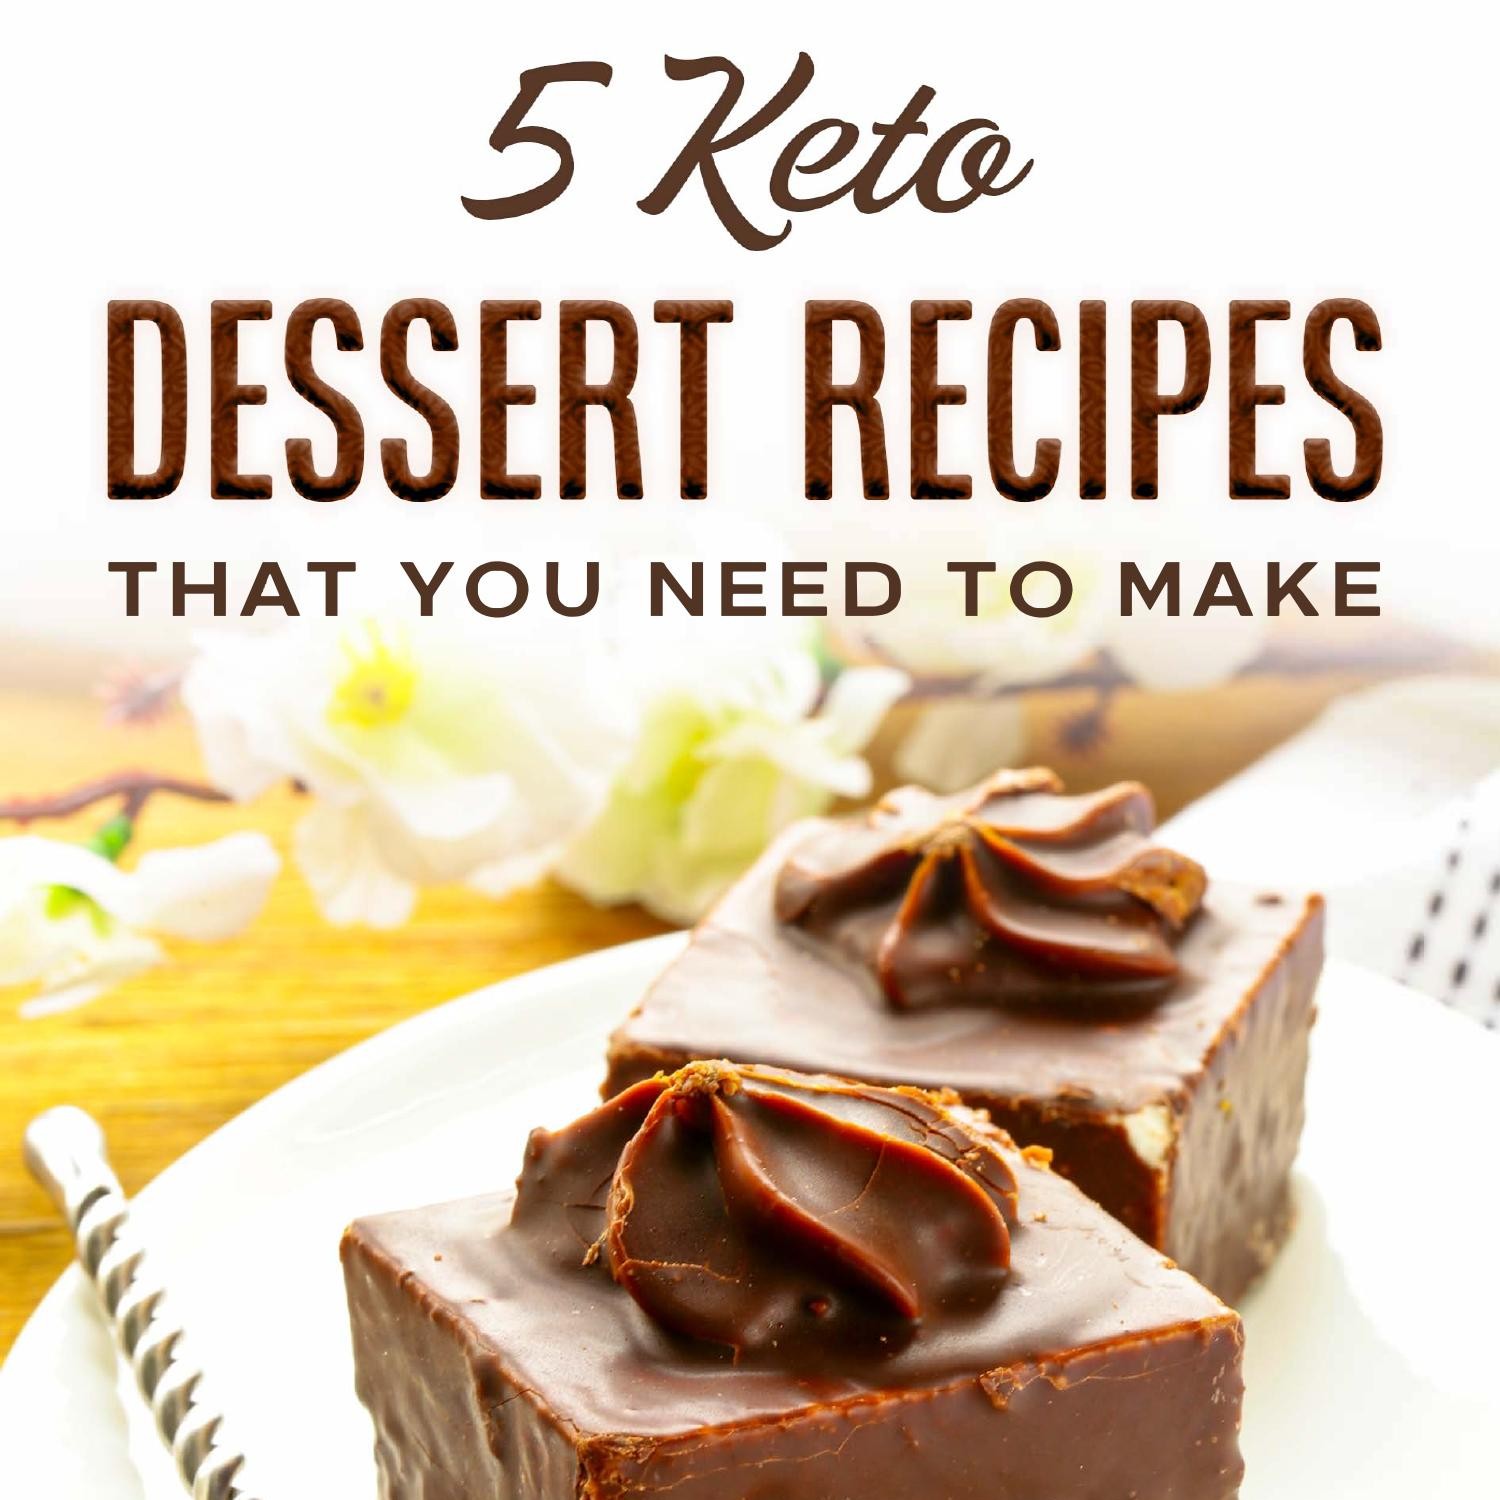 5 Keto Dessert Recipes That You Need To Make.pdf | DocDroid